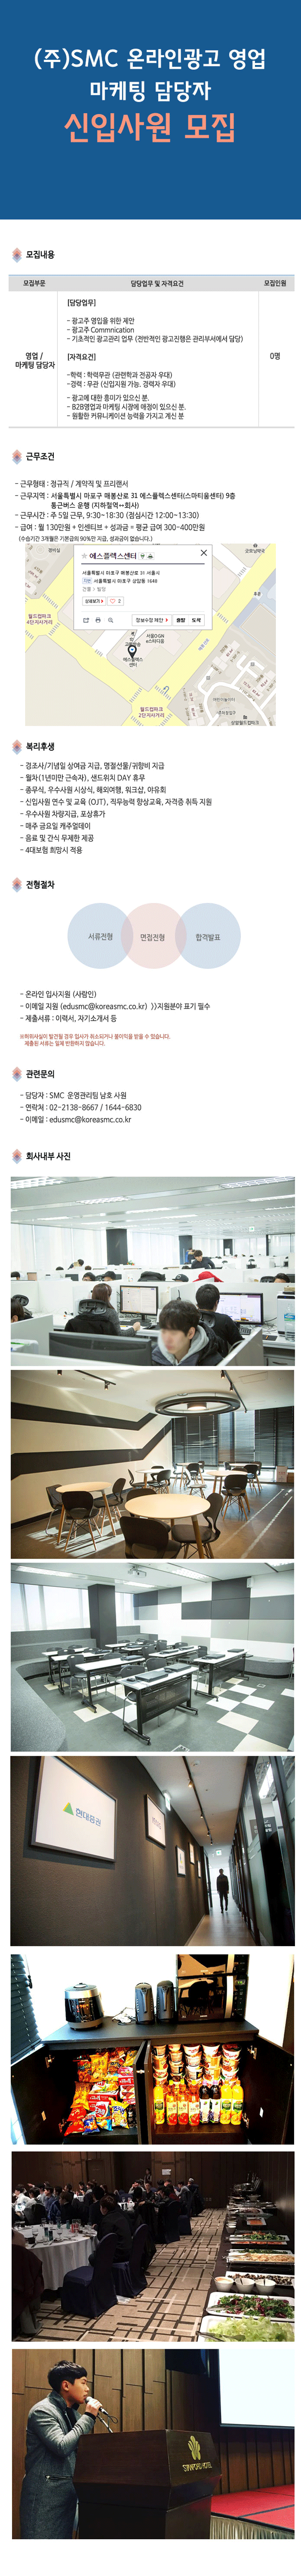 ㈜SMC 온라인마케팅 사업부 하반기 신입사원 모집